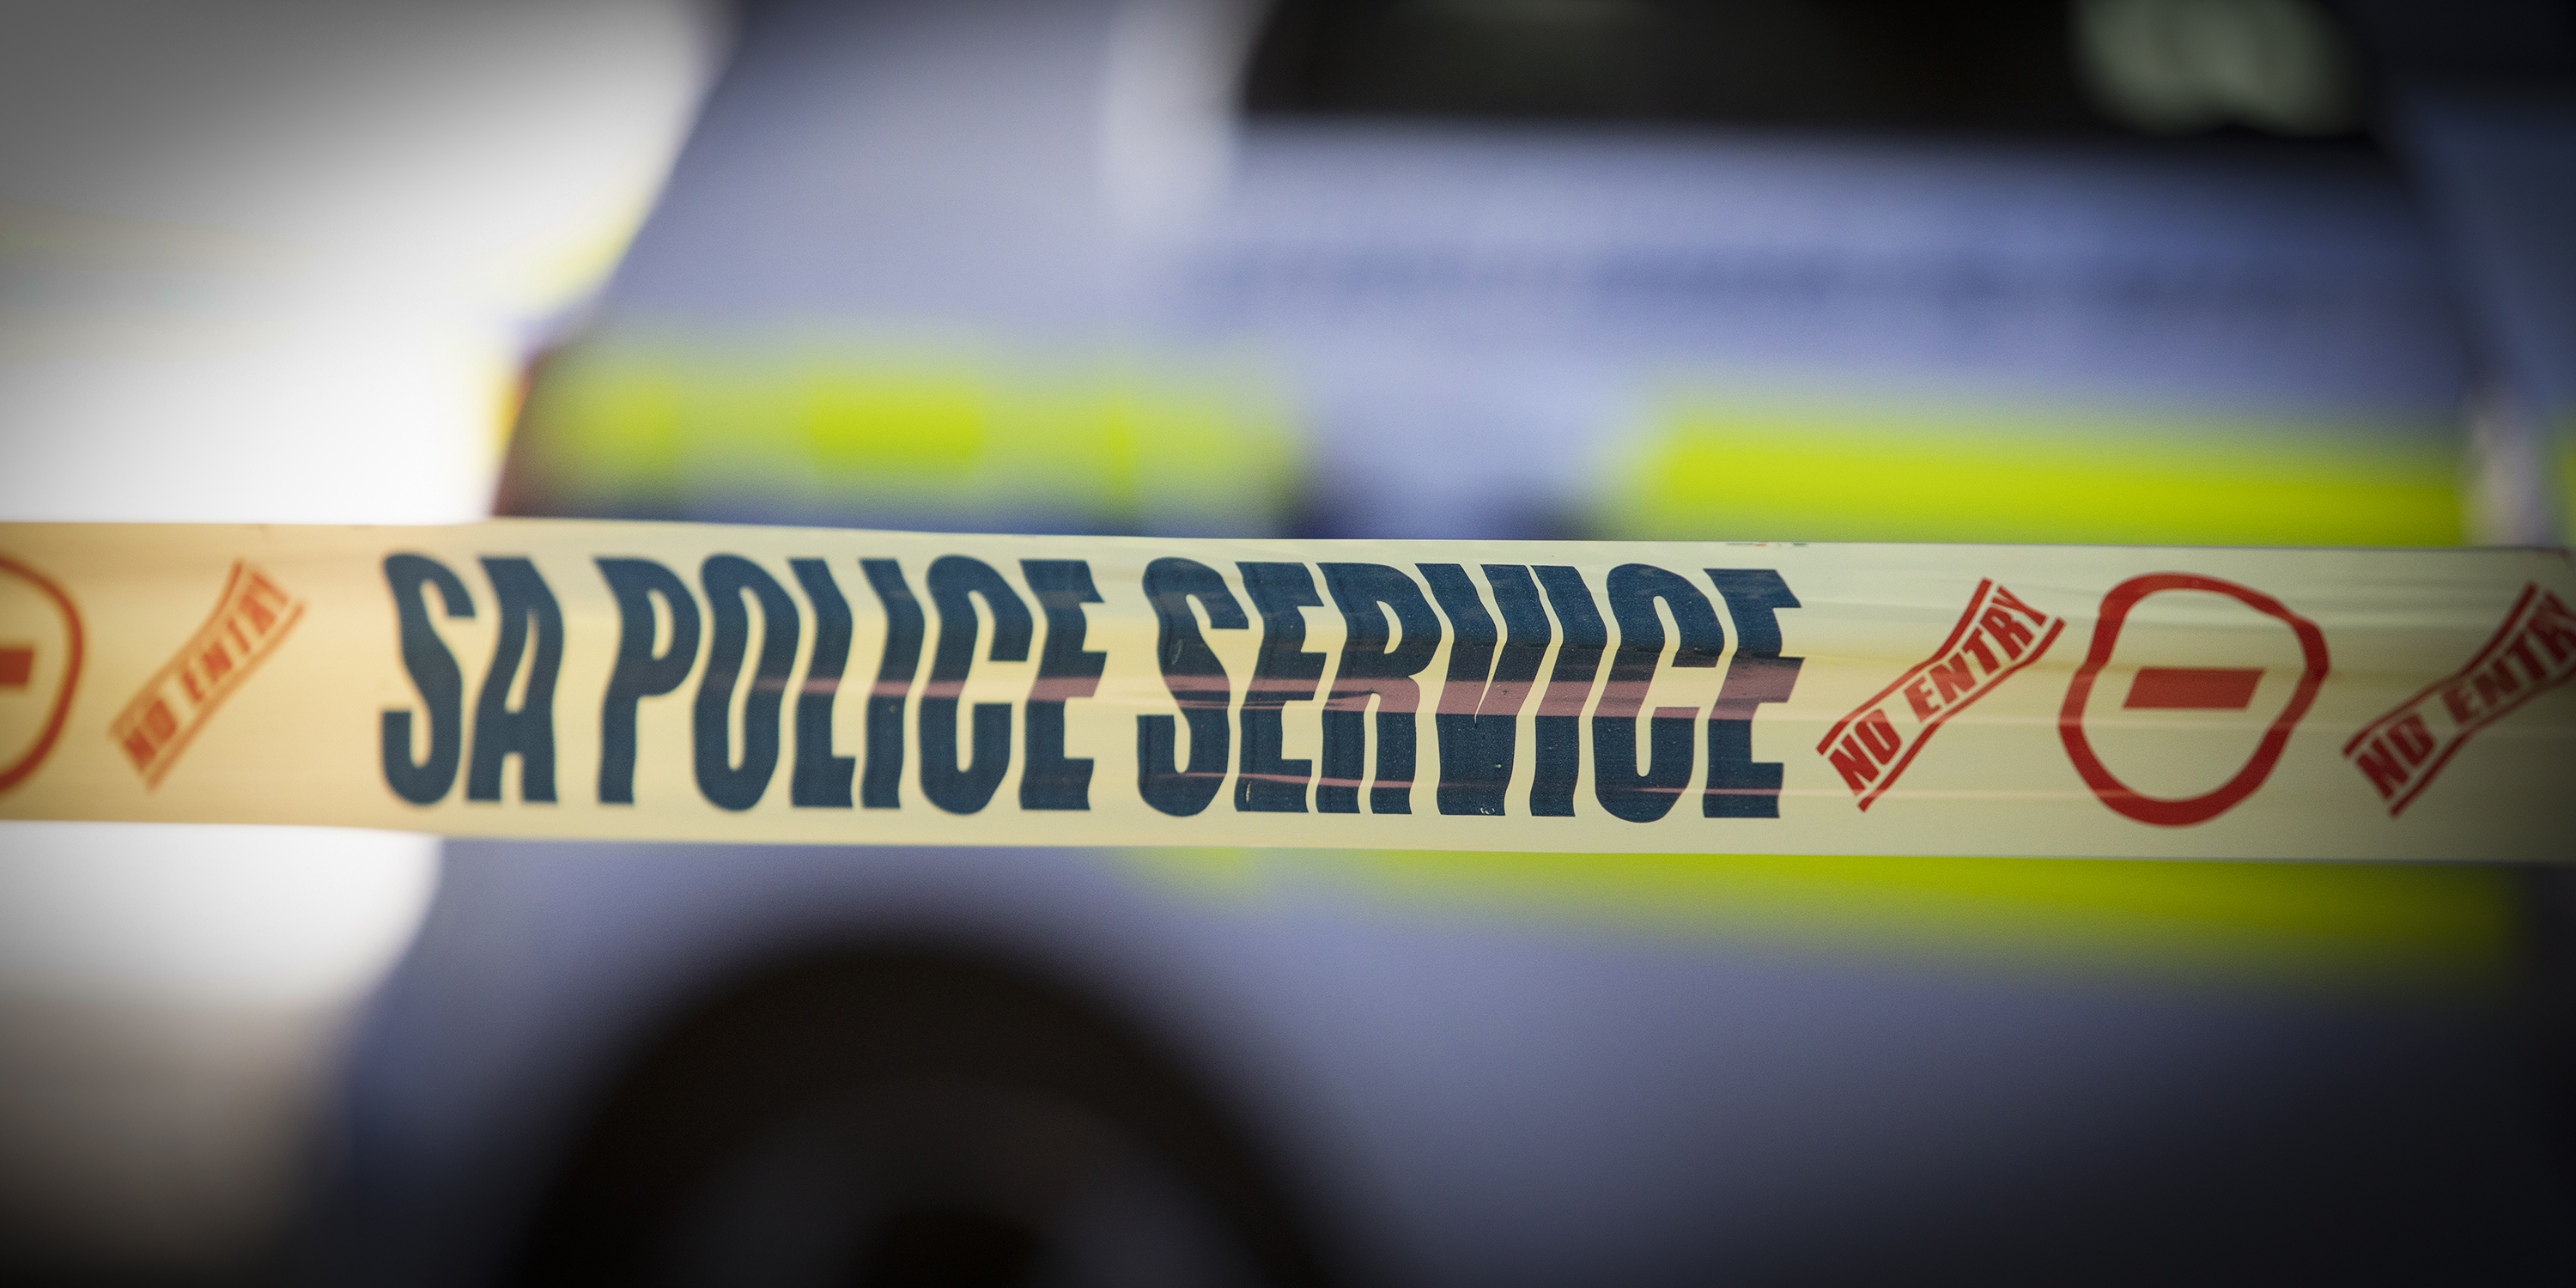 South African Police Service, Pretoria police attack